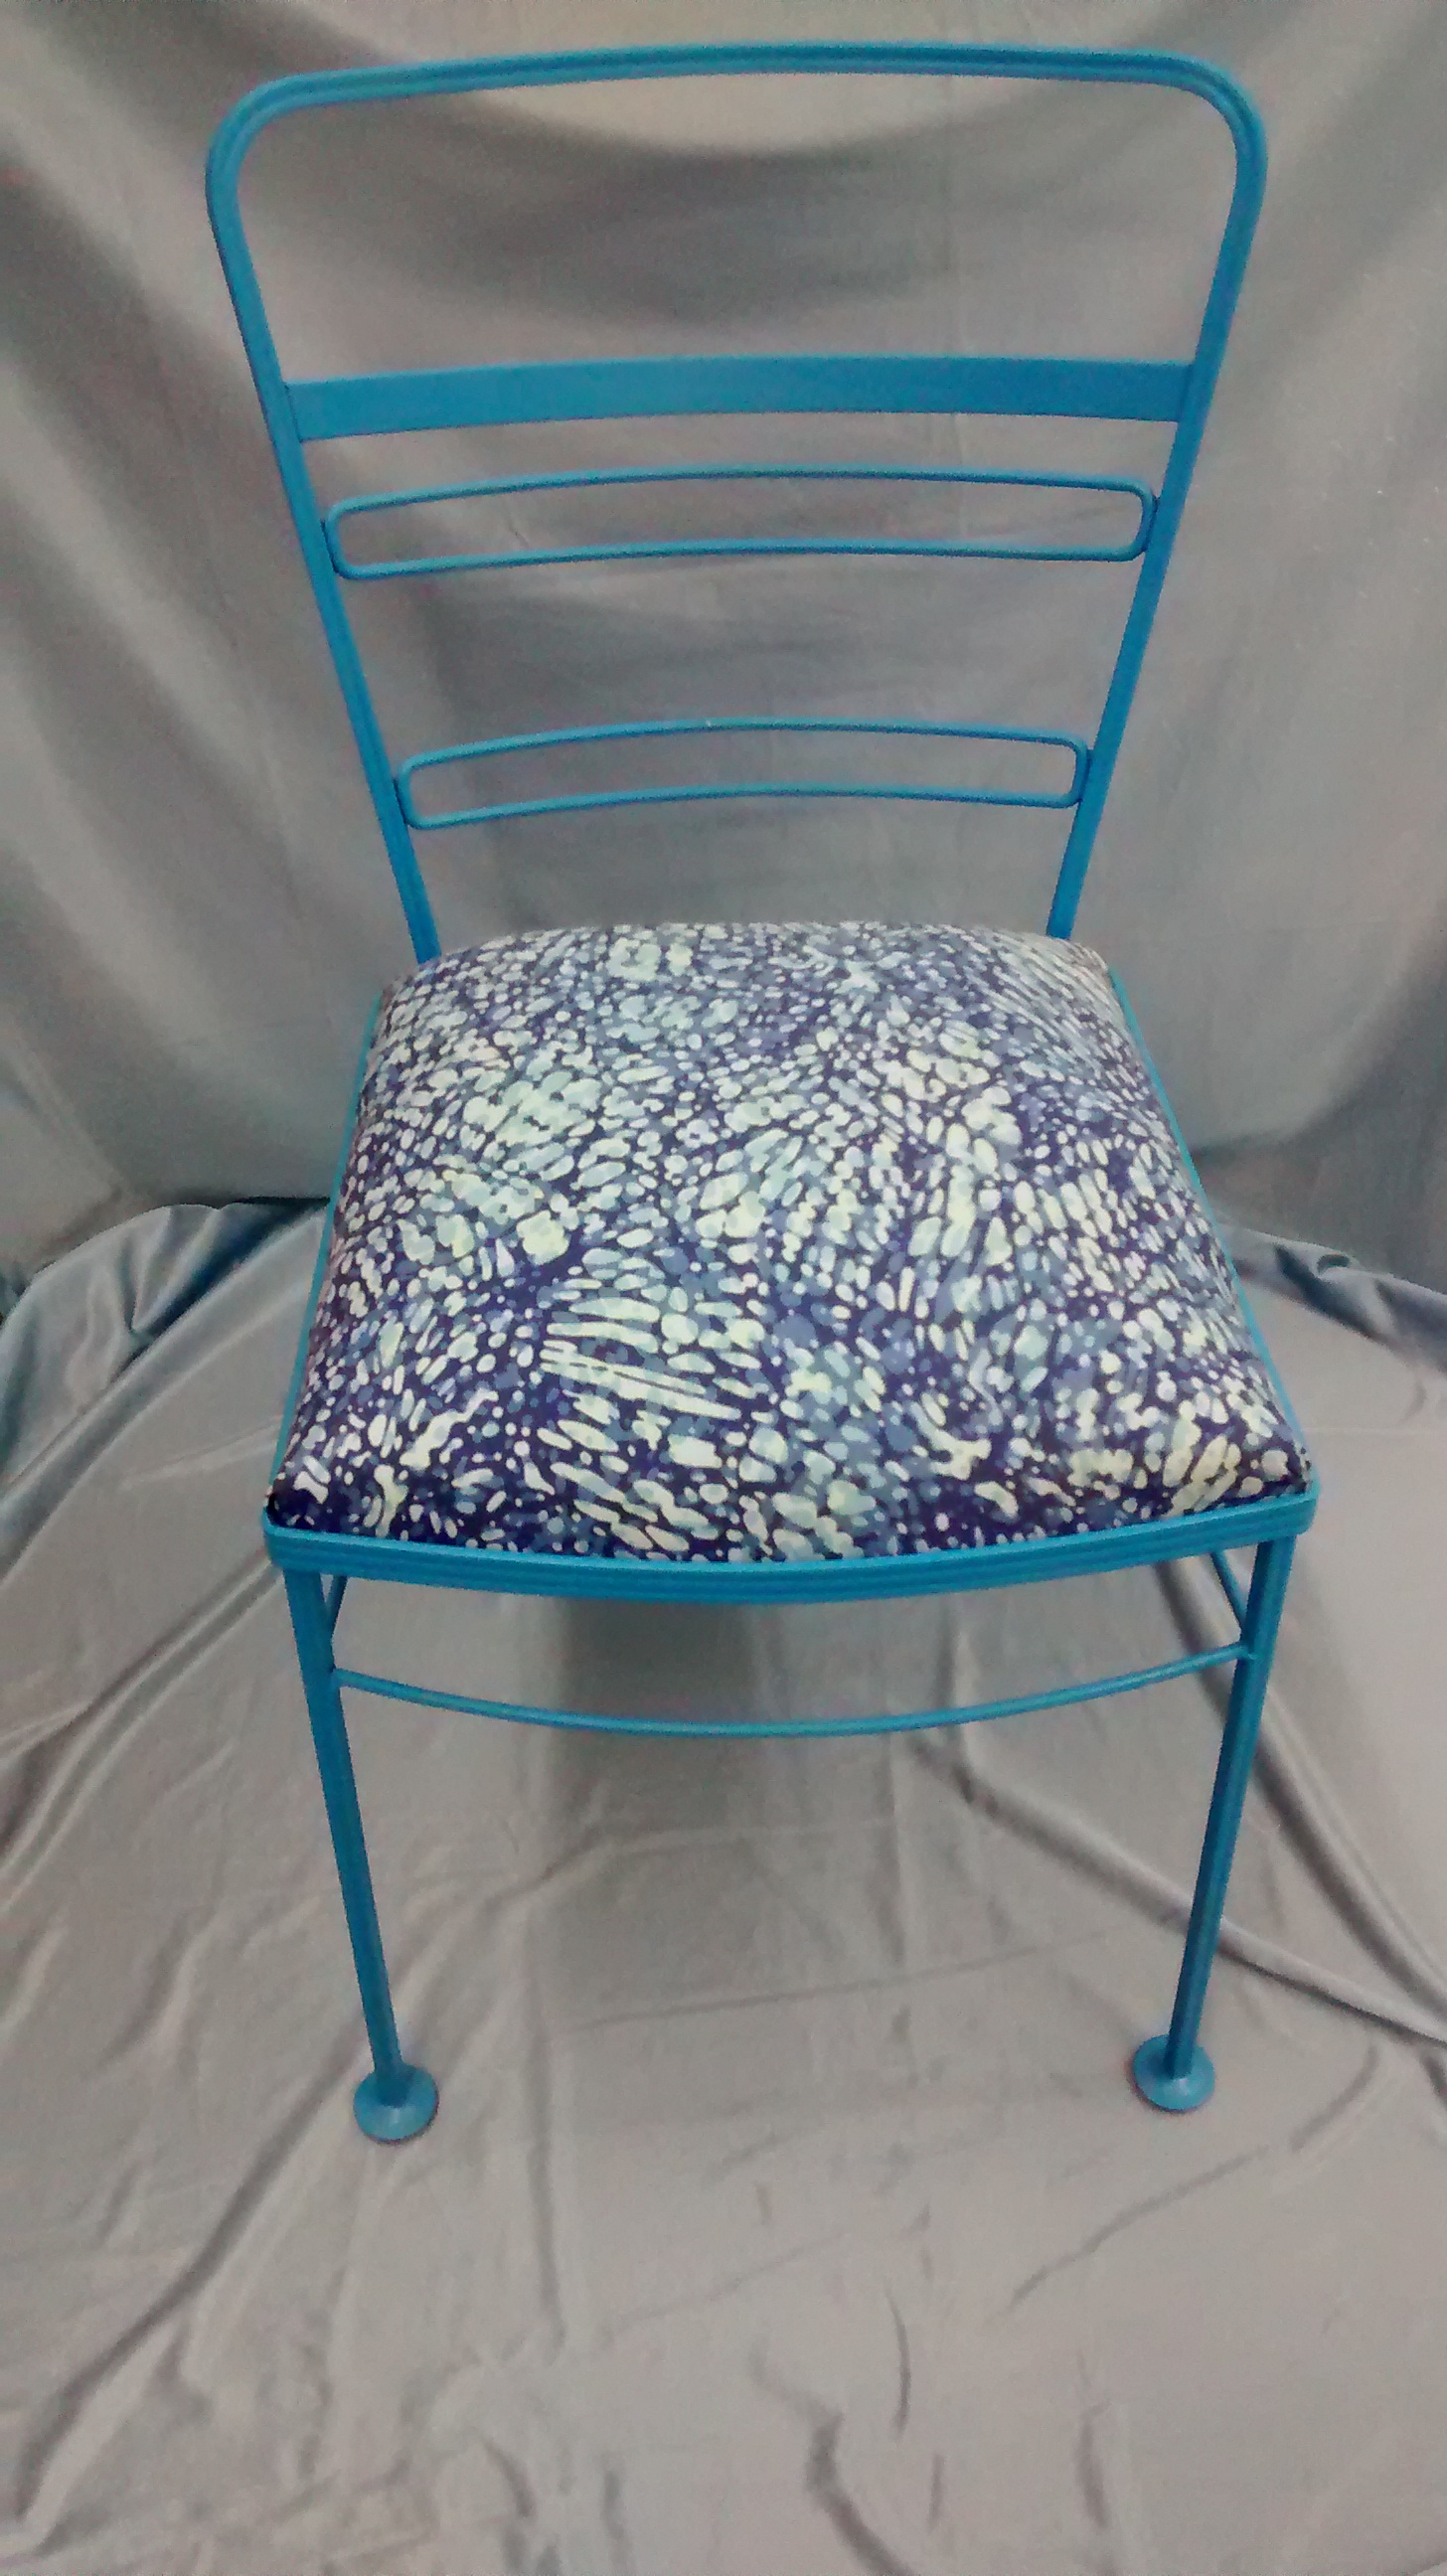 Aqua Blue Metal Chair with New Comfy Cushion